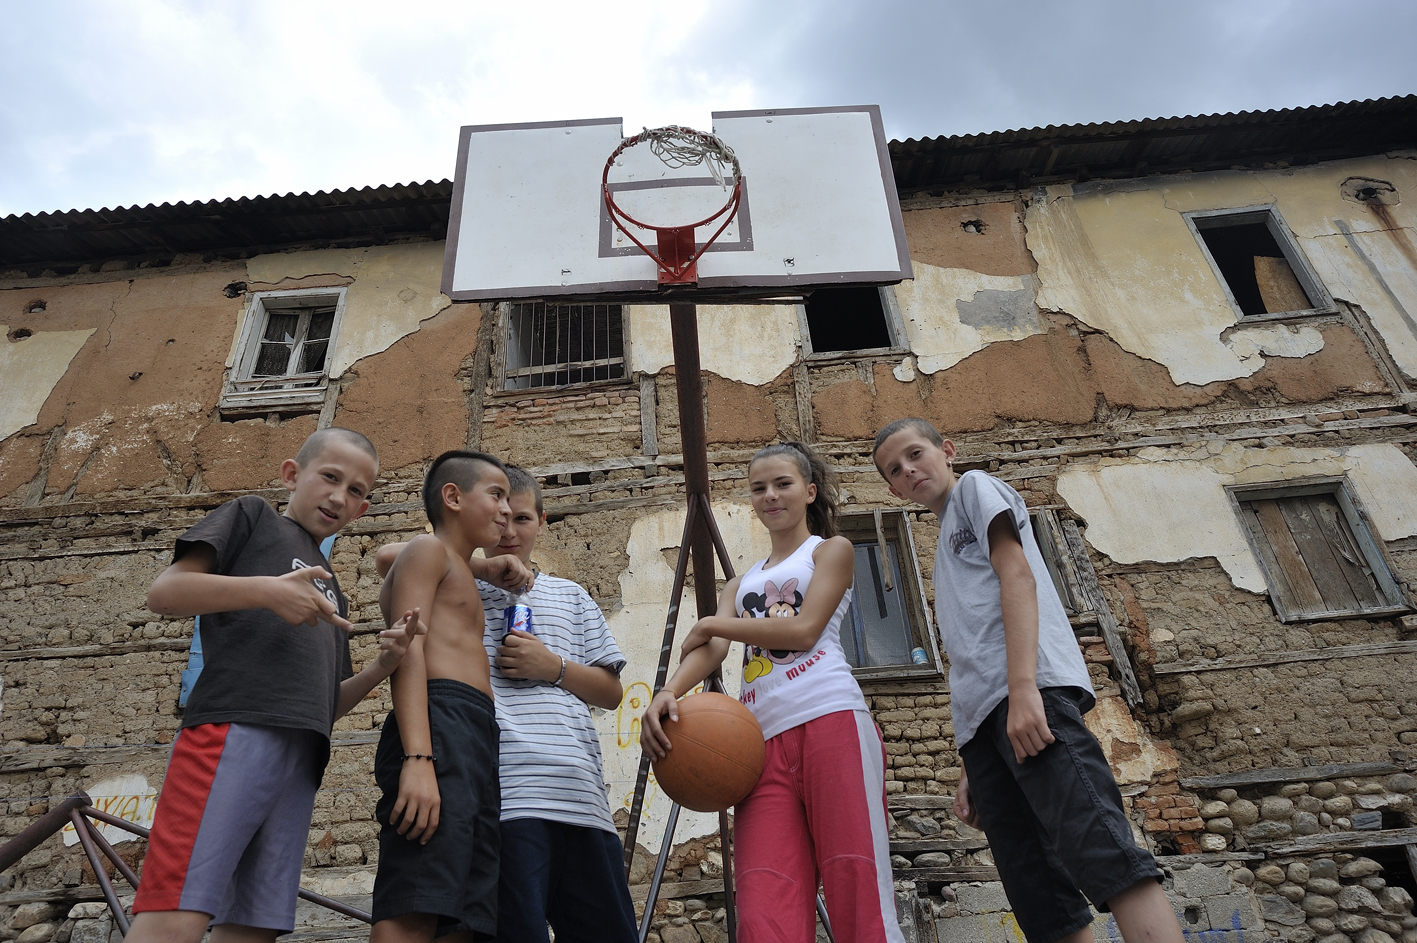 Kids in Kosovo. © Tobias Strahl